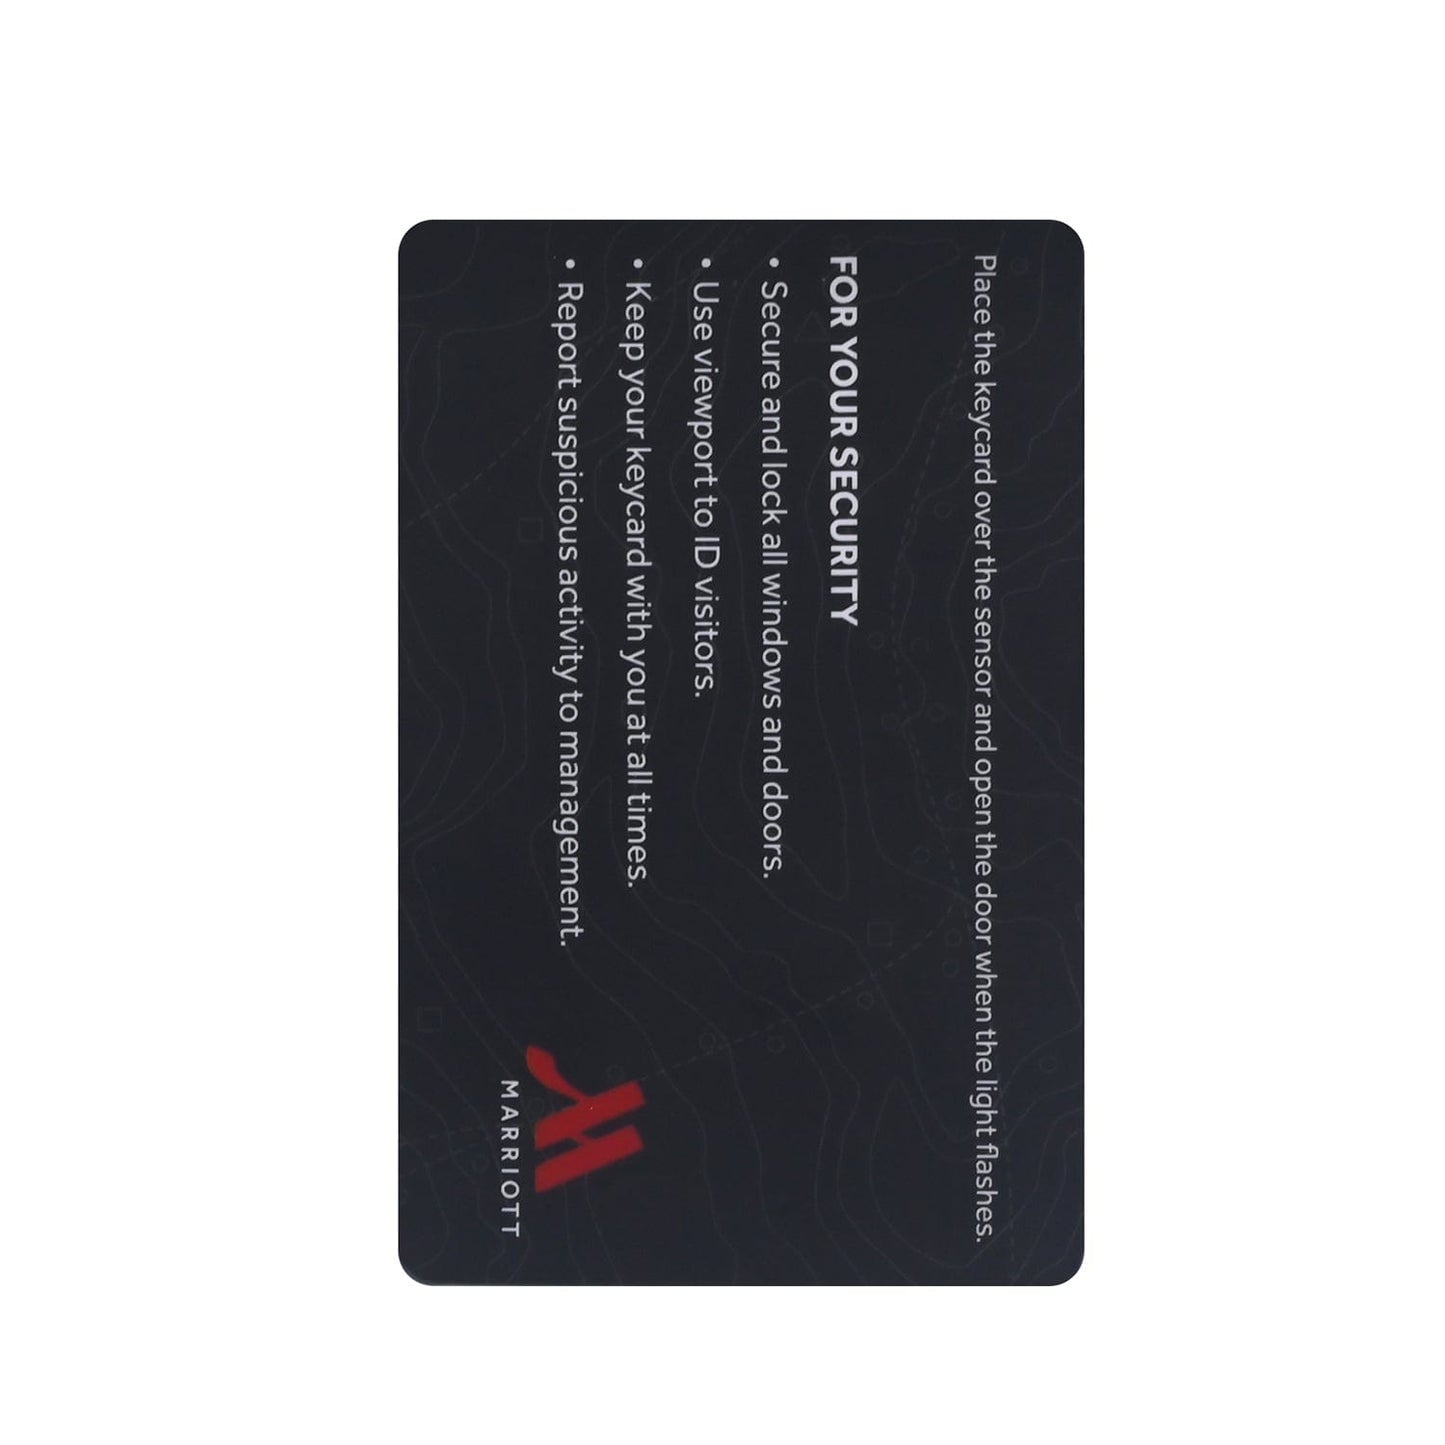 Marriott FS Bonvoy Elite Member ULC RFID Key Cards (Sold in boxes of 200)